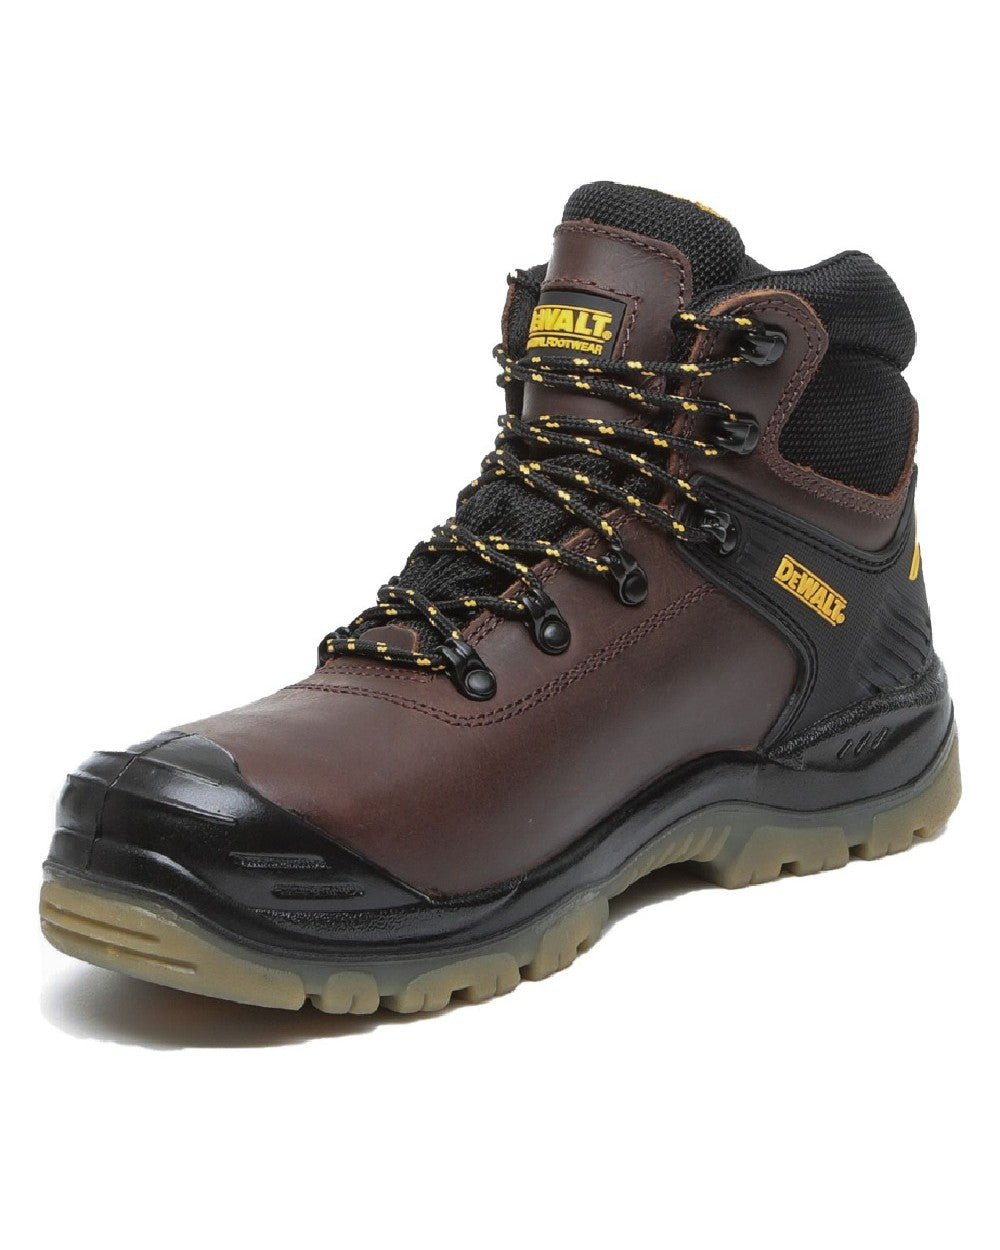 DeWalt Newark Waterproof Safety Hiker Boots in Brown 